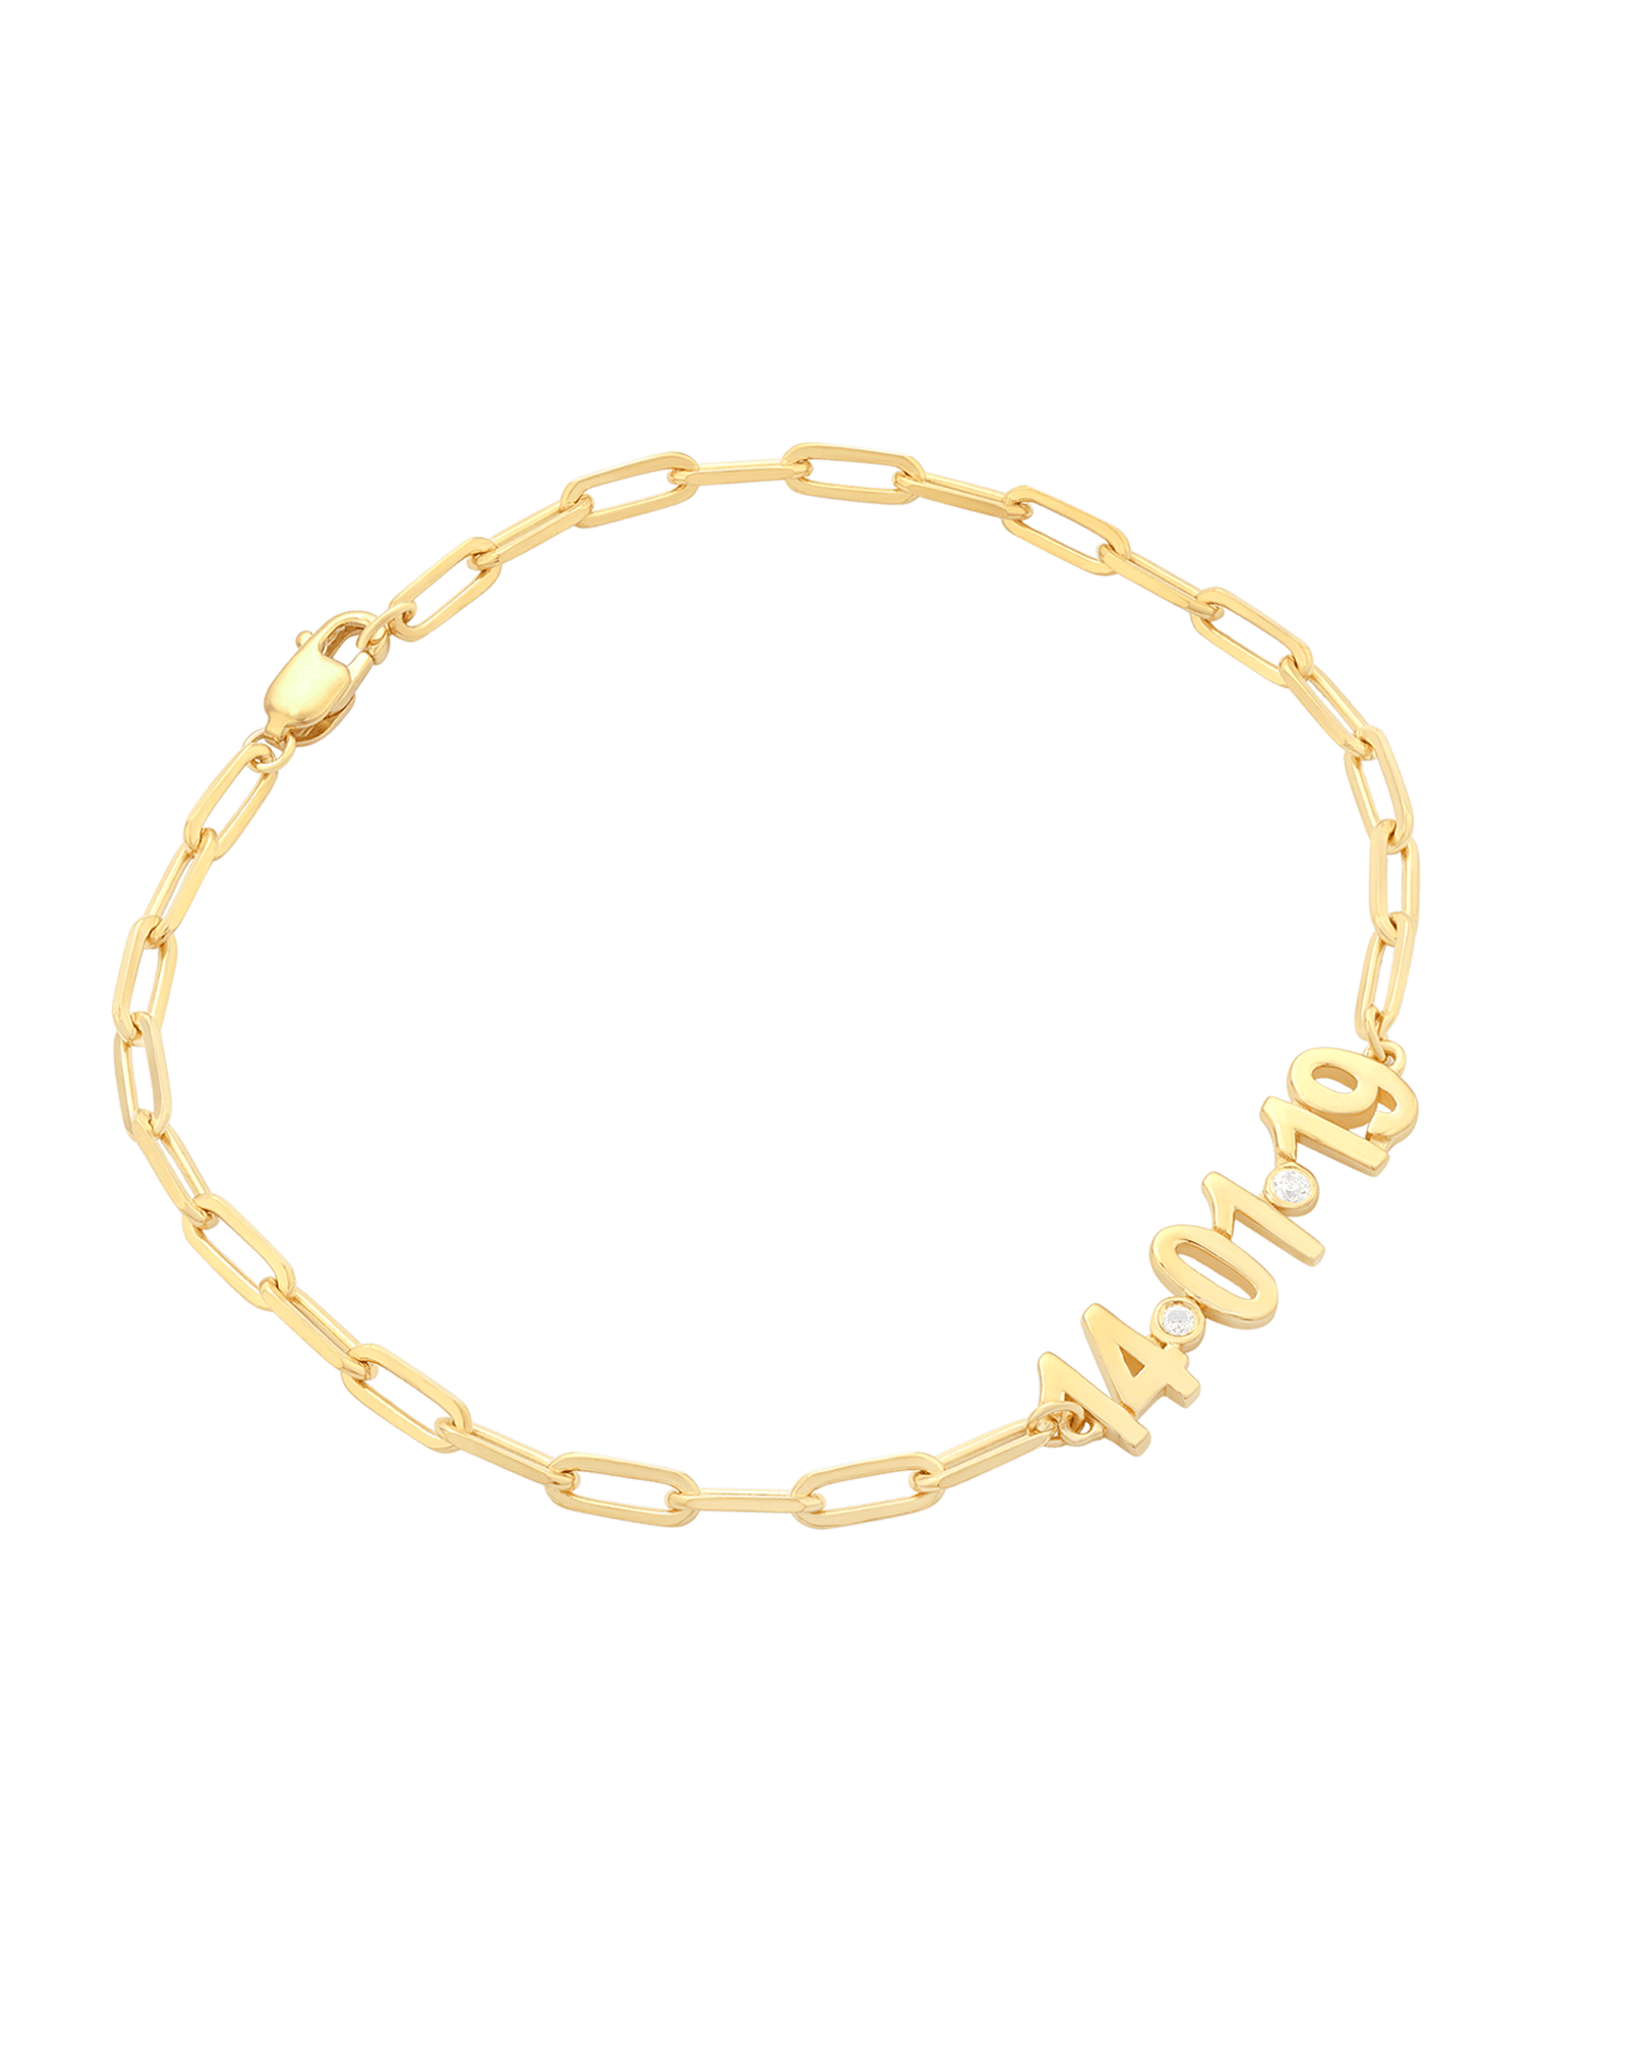 Birthdate Diamond Bracelet - 14K Rose Gold Bracelets magal-dev 